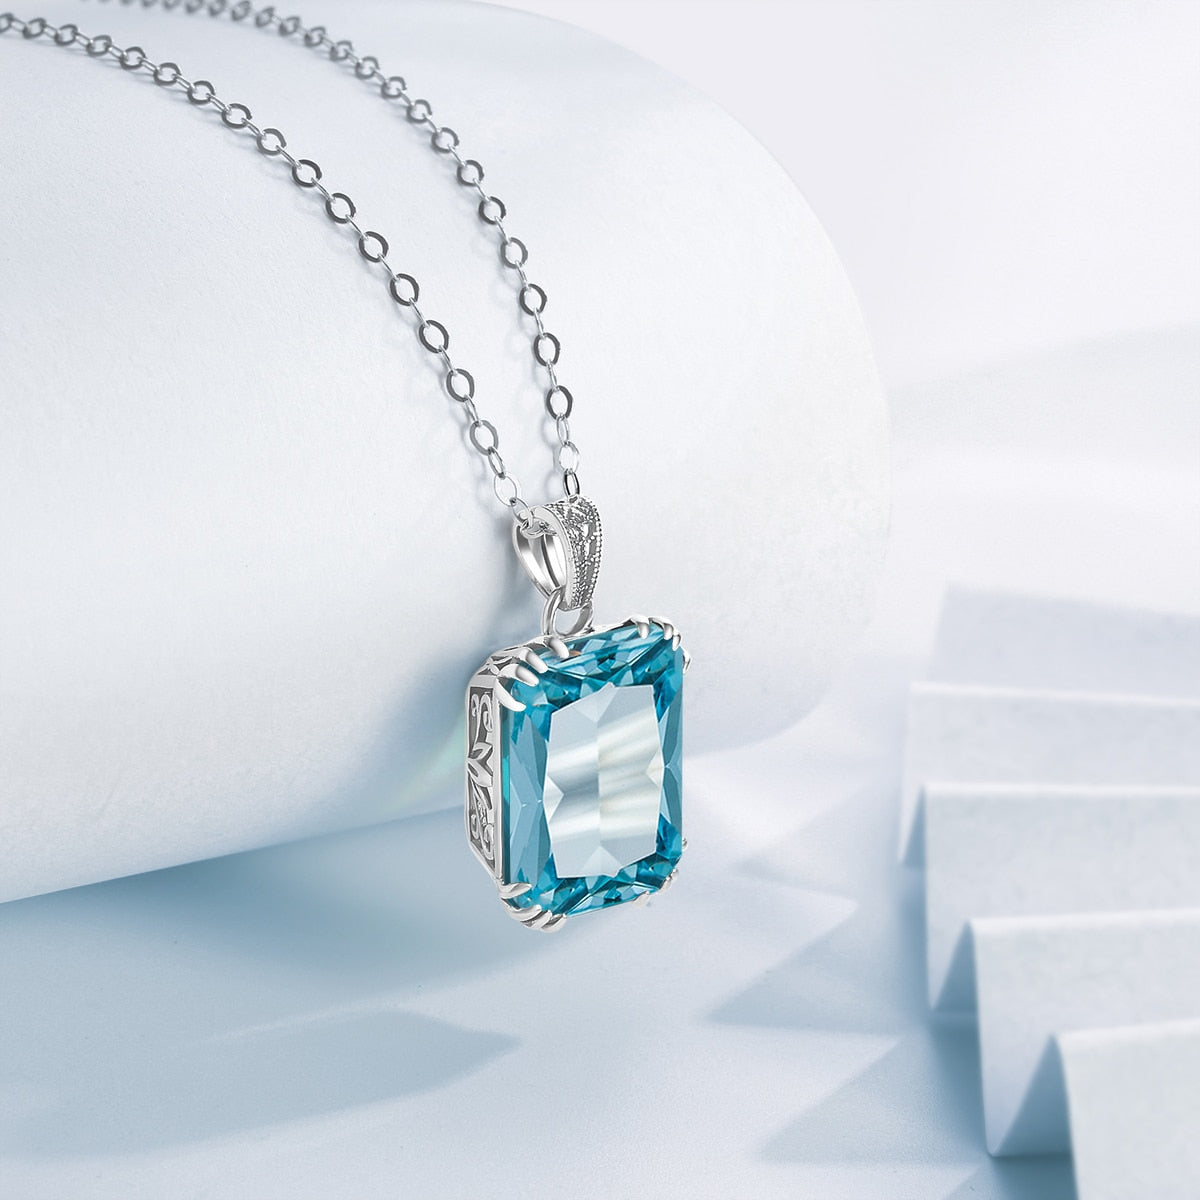 SILVERCHAKRA 925 Sterling Silver Necklace For Women Luxury Aquamarine Gemstones Necklace Pendant Fine Jewelry Filigree Design Aquamarine 45cm